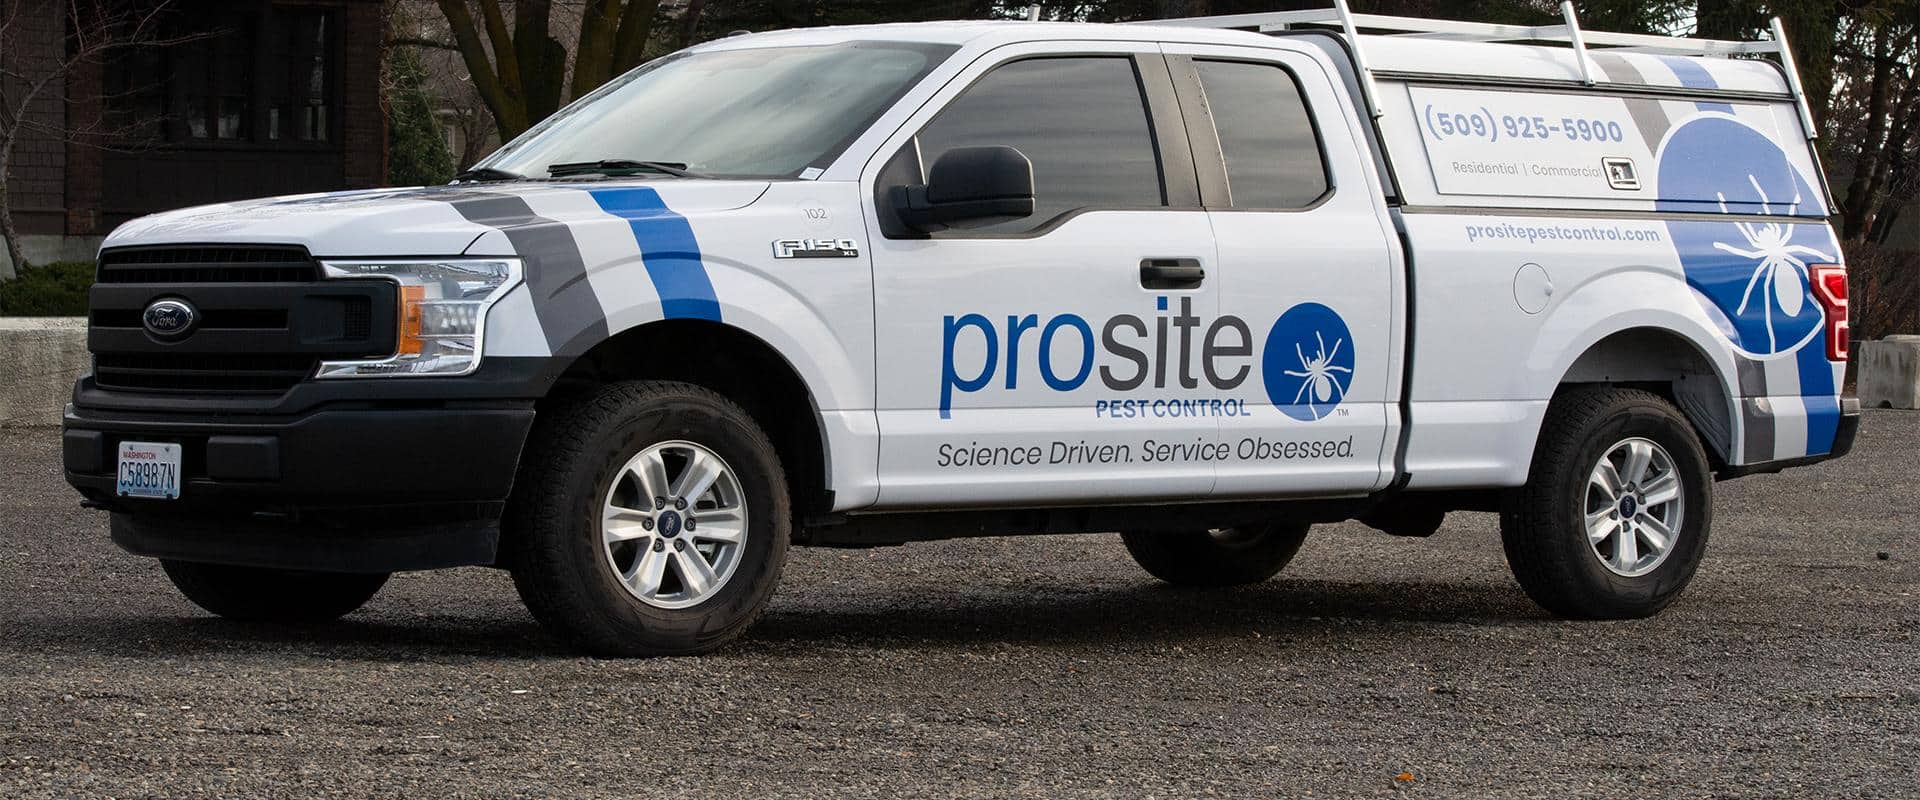 prosite pest control truck in ellensburg wa